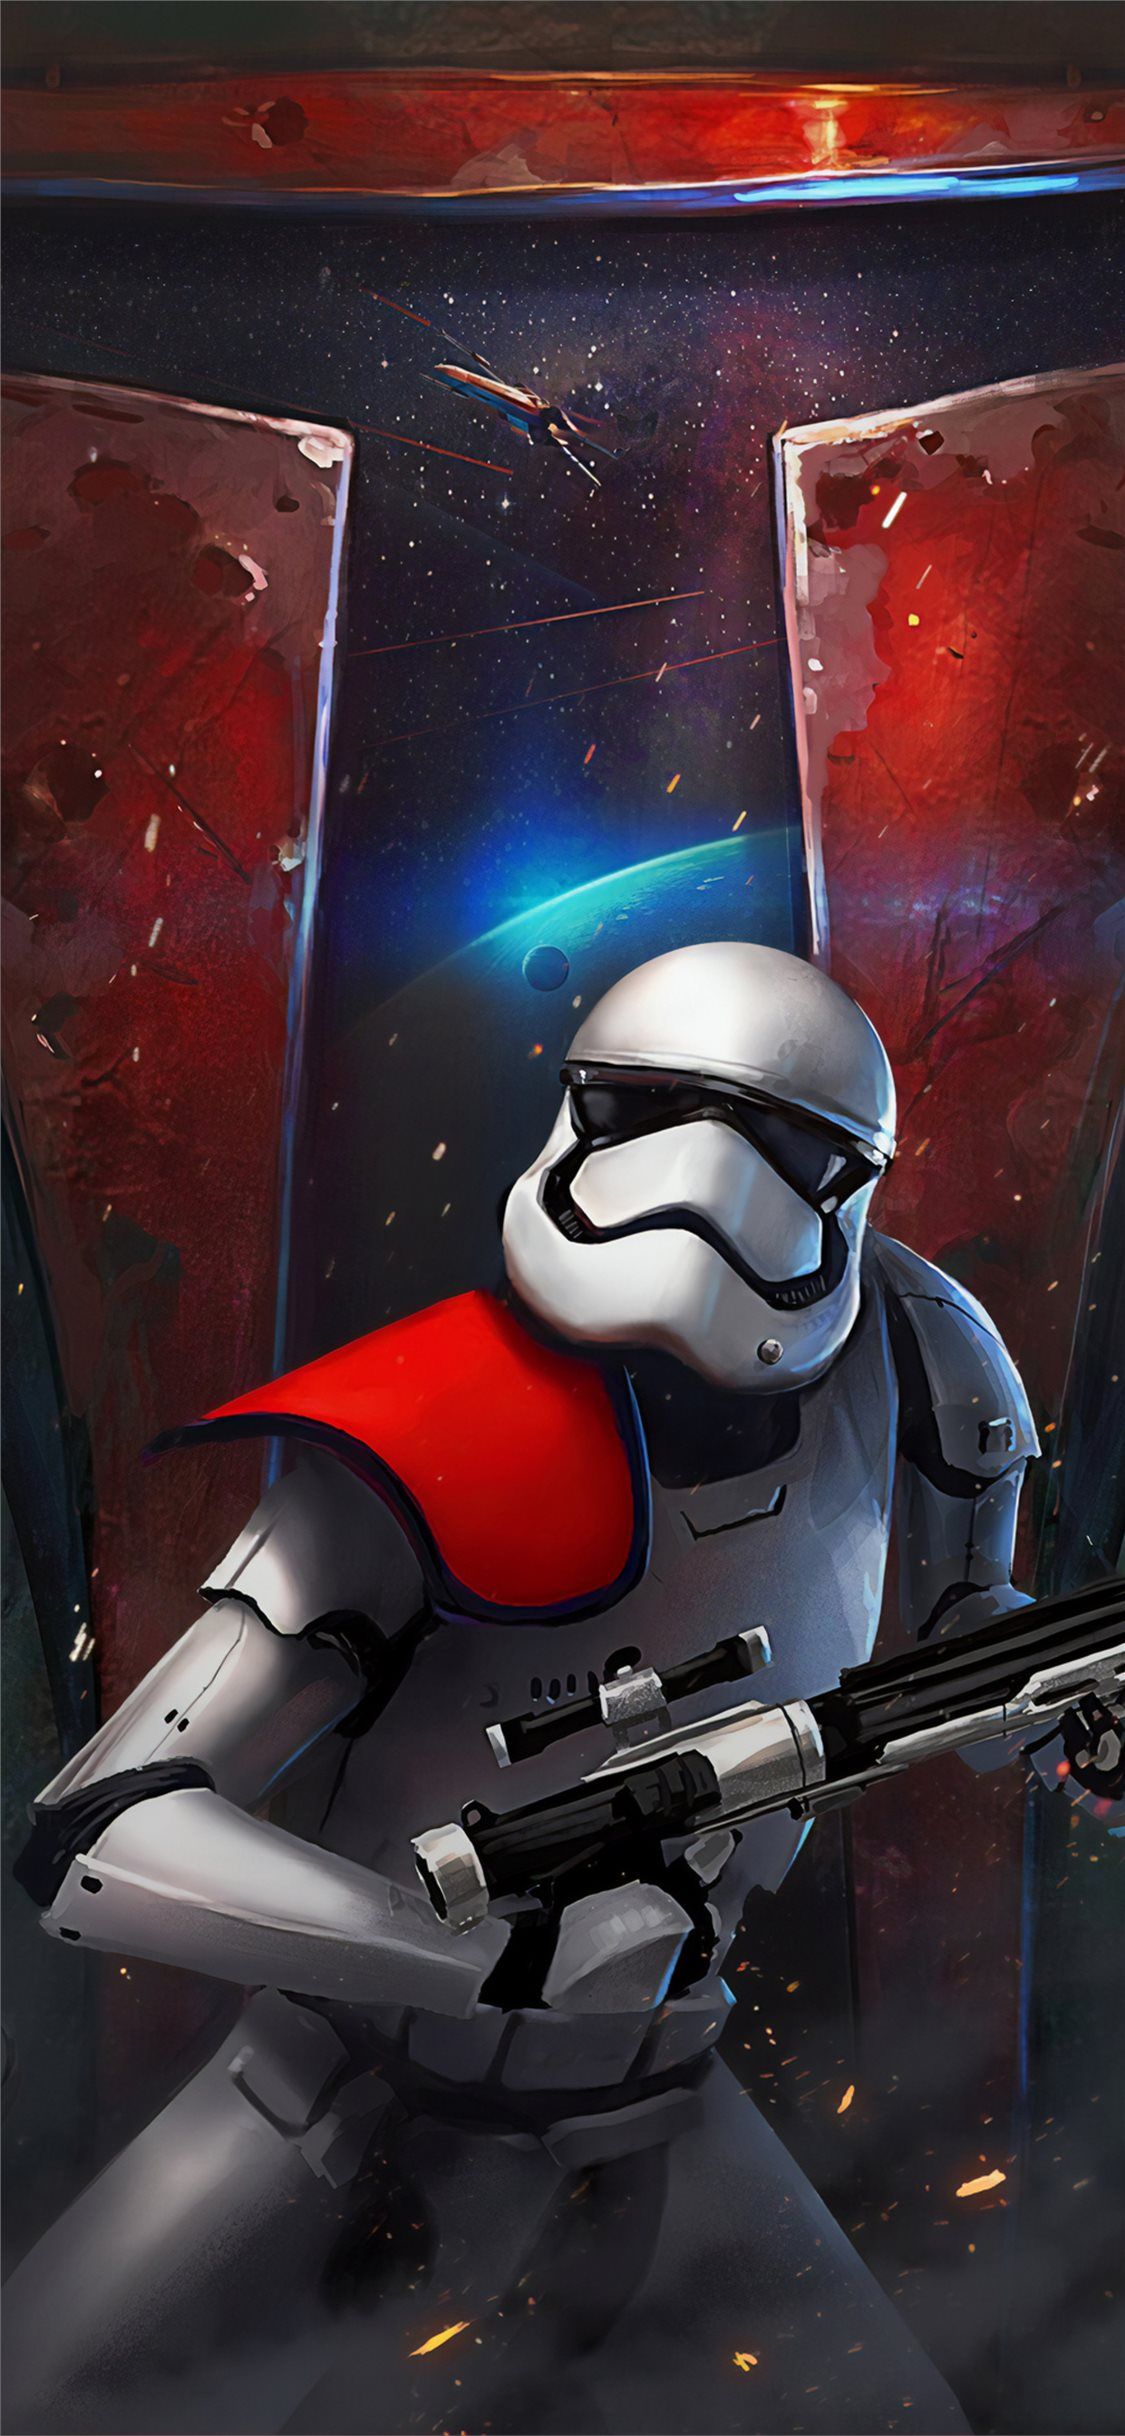 storm trooper iPhone X Wallpaper Free .ilikewallpaper.net